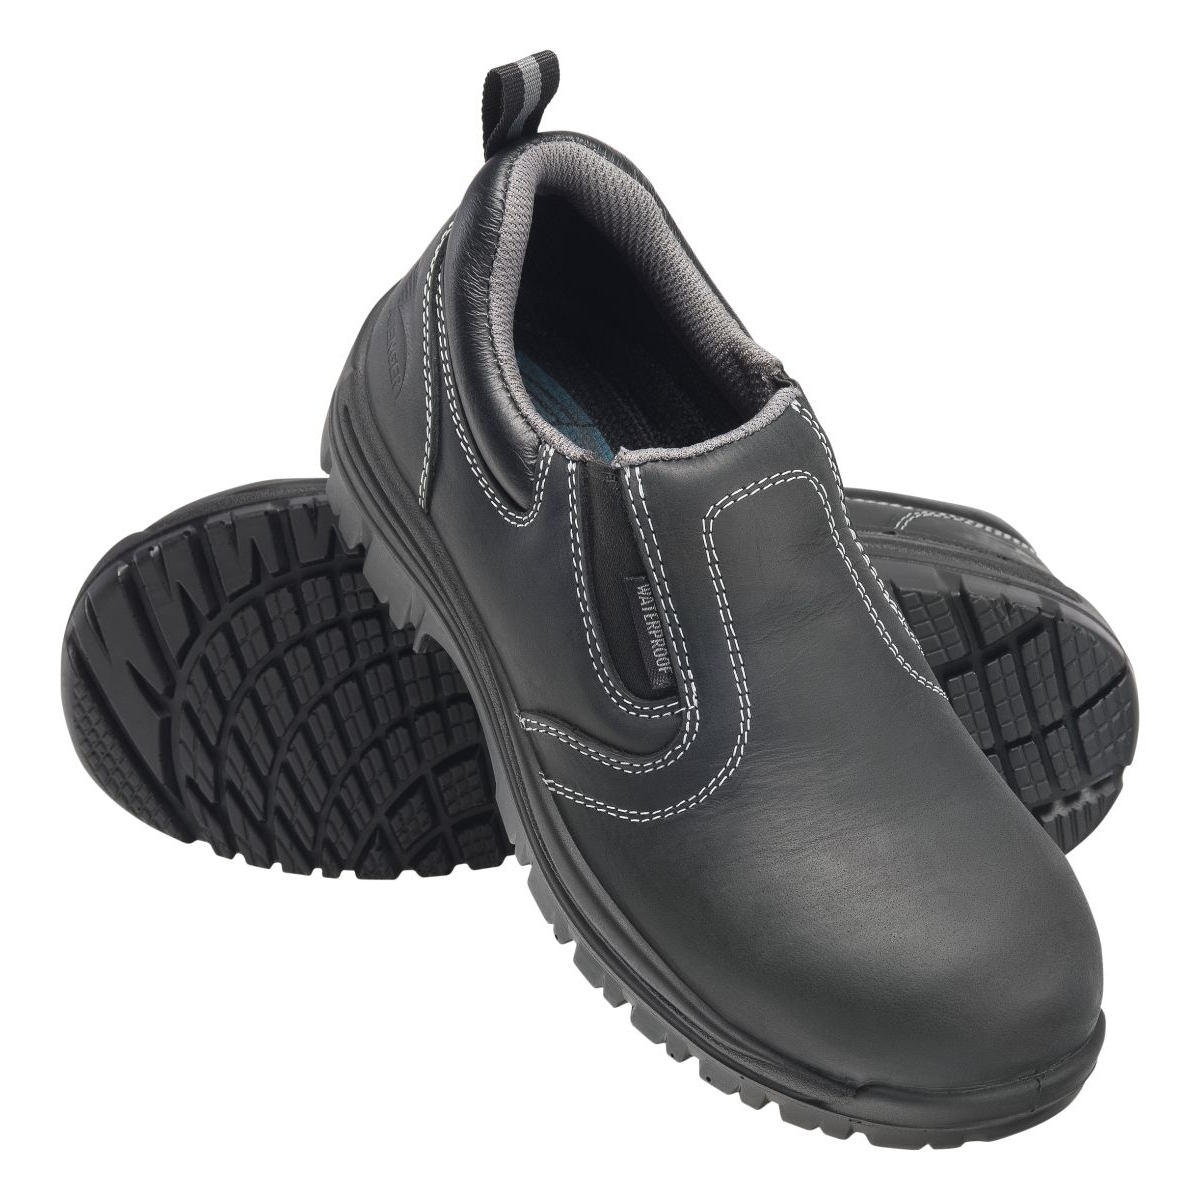 FSI FOOTWEAR SPECIALTIES INTERNATIONAL NAUTILUS Avenger Women's Foreman Slip-On Composite Toe PR Work Shoes Black - A7169 - BLACK, 6-W